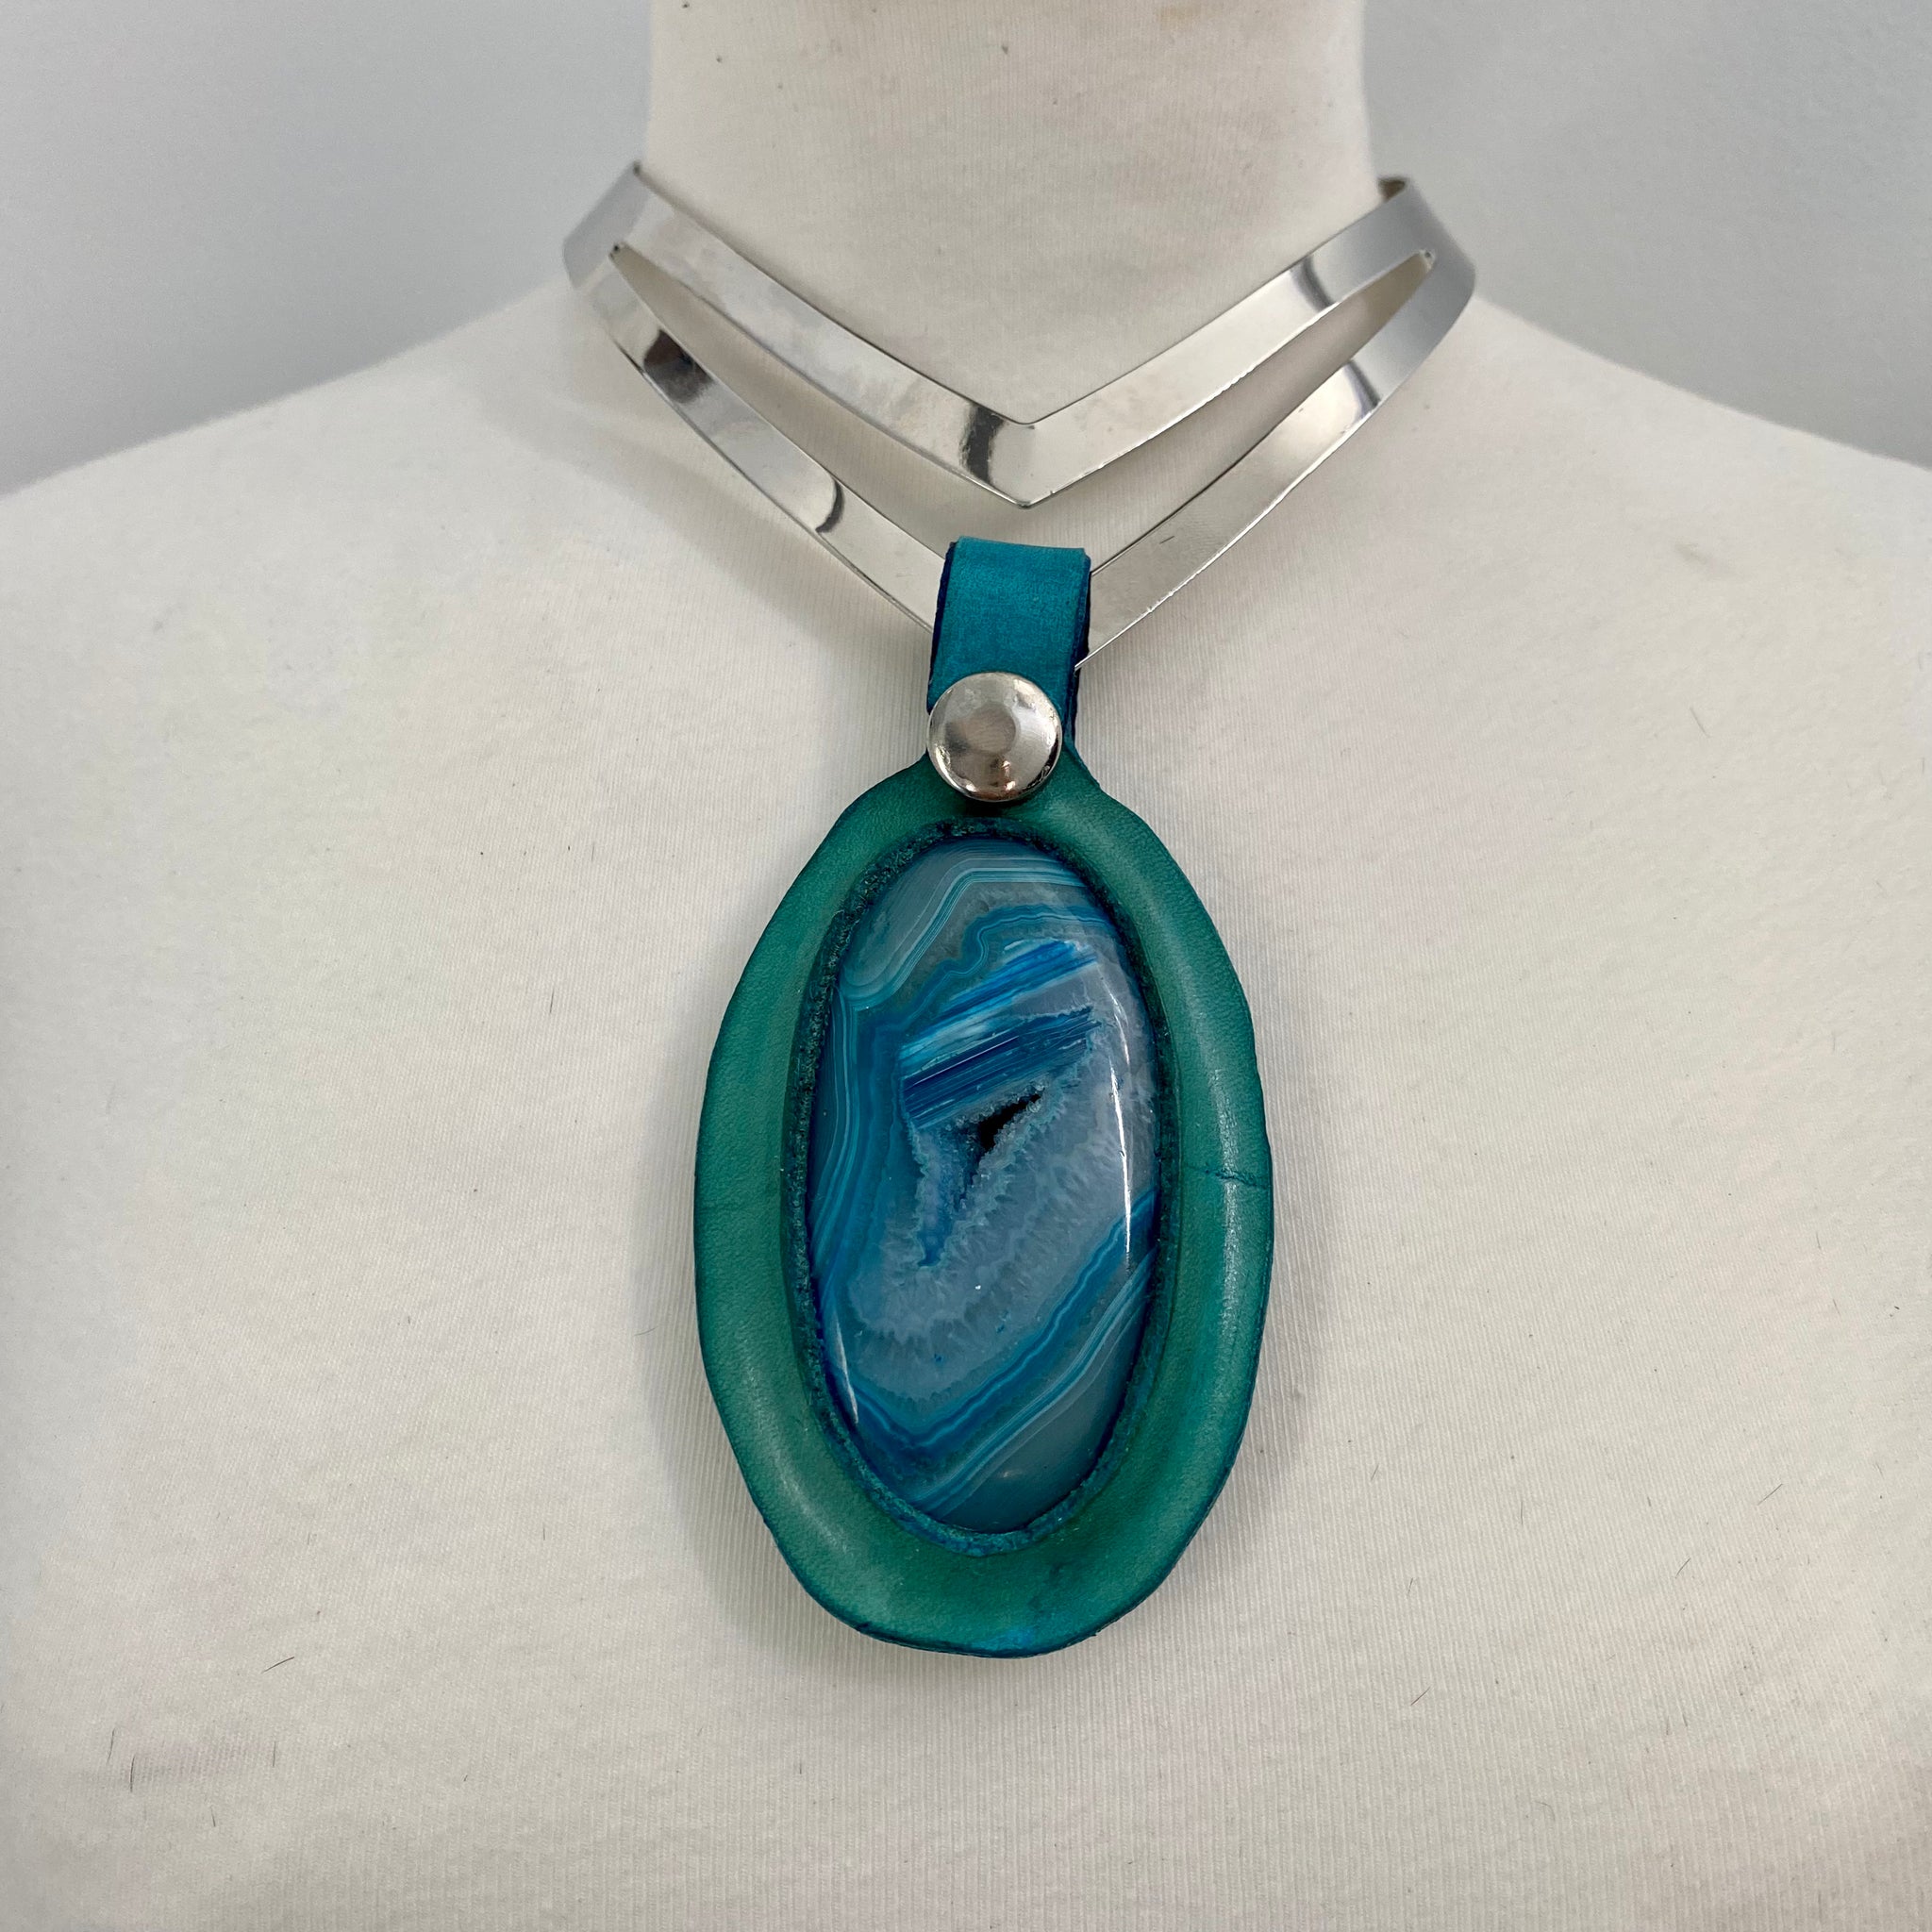 Metal torque necklace with oversized solar quartz stone pendent